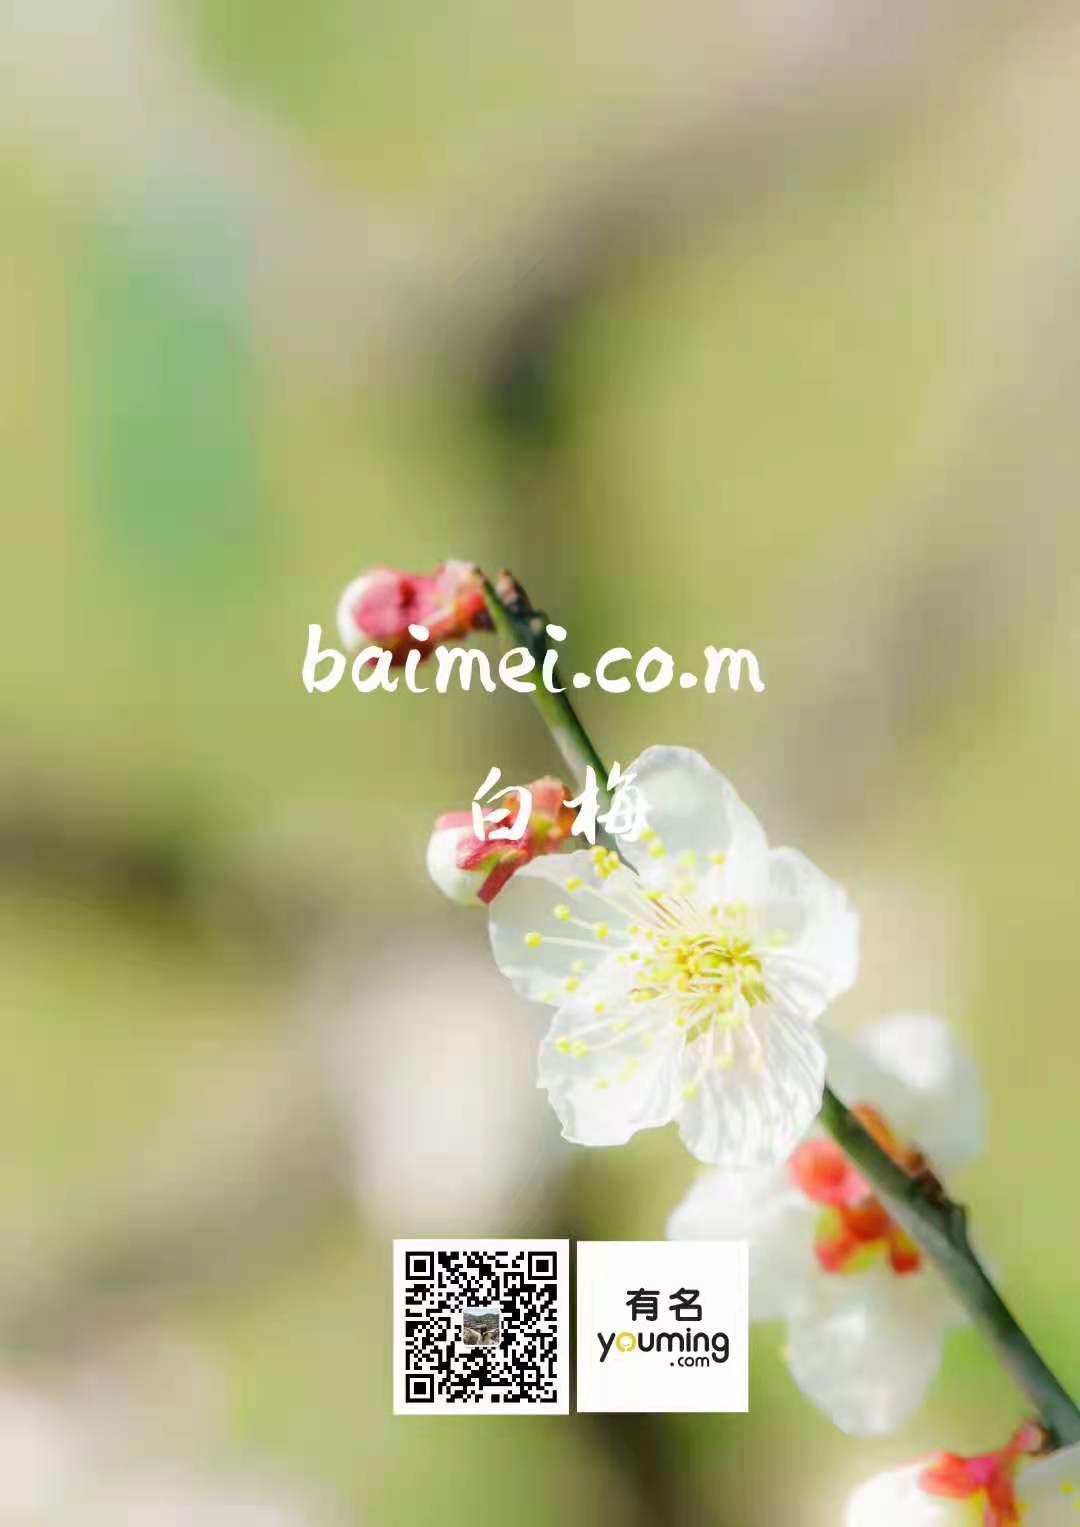 baimei.com域名交易,域名买卖,域名购买